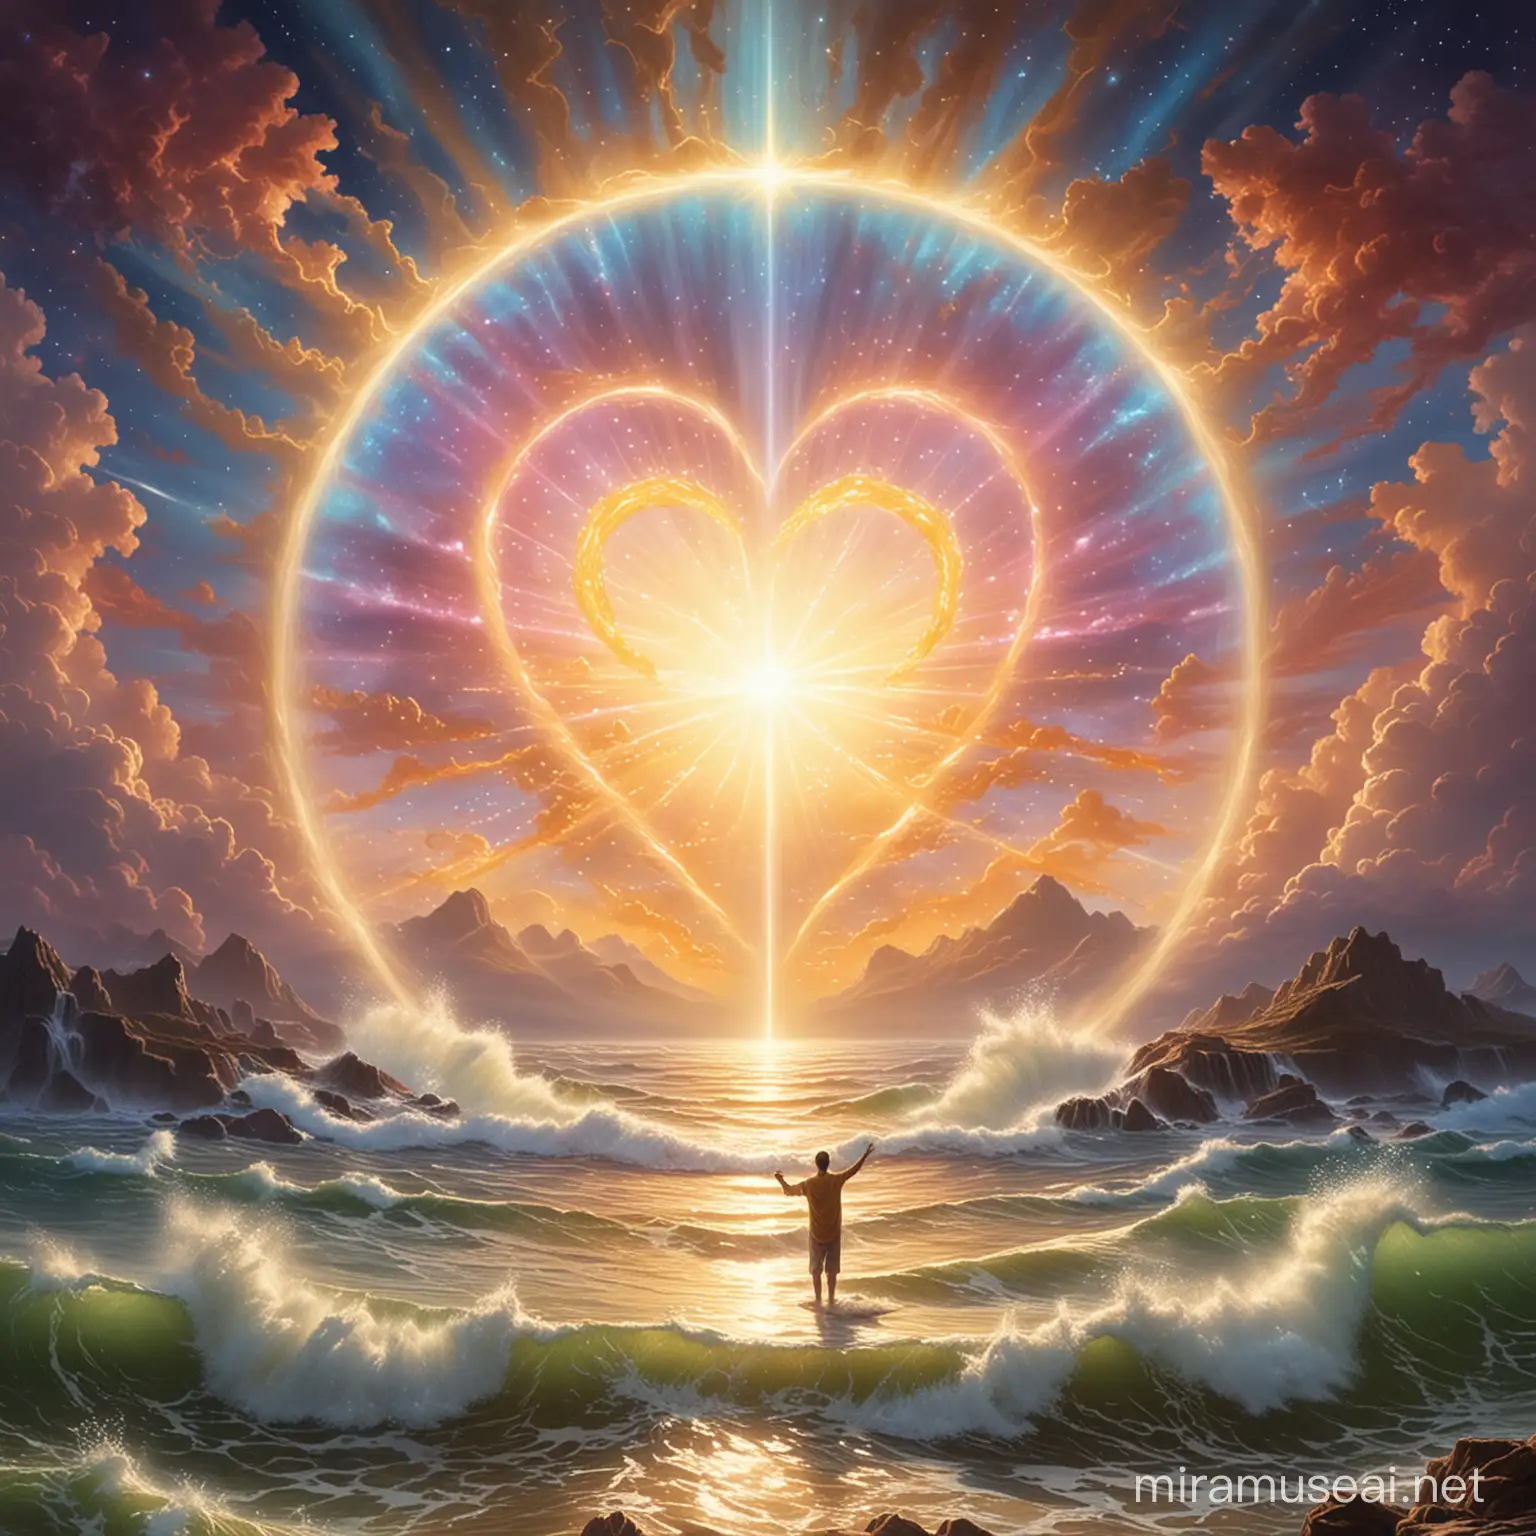 Divine Love Illuminated Stream of Life from Universal Being